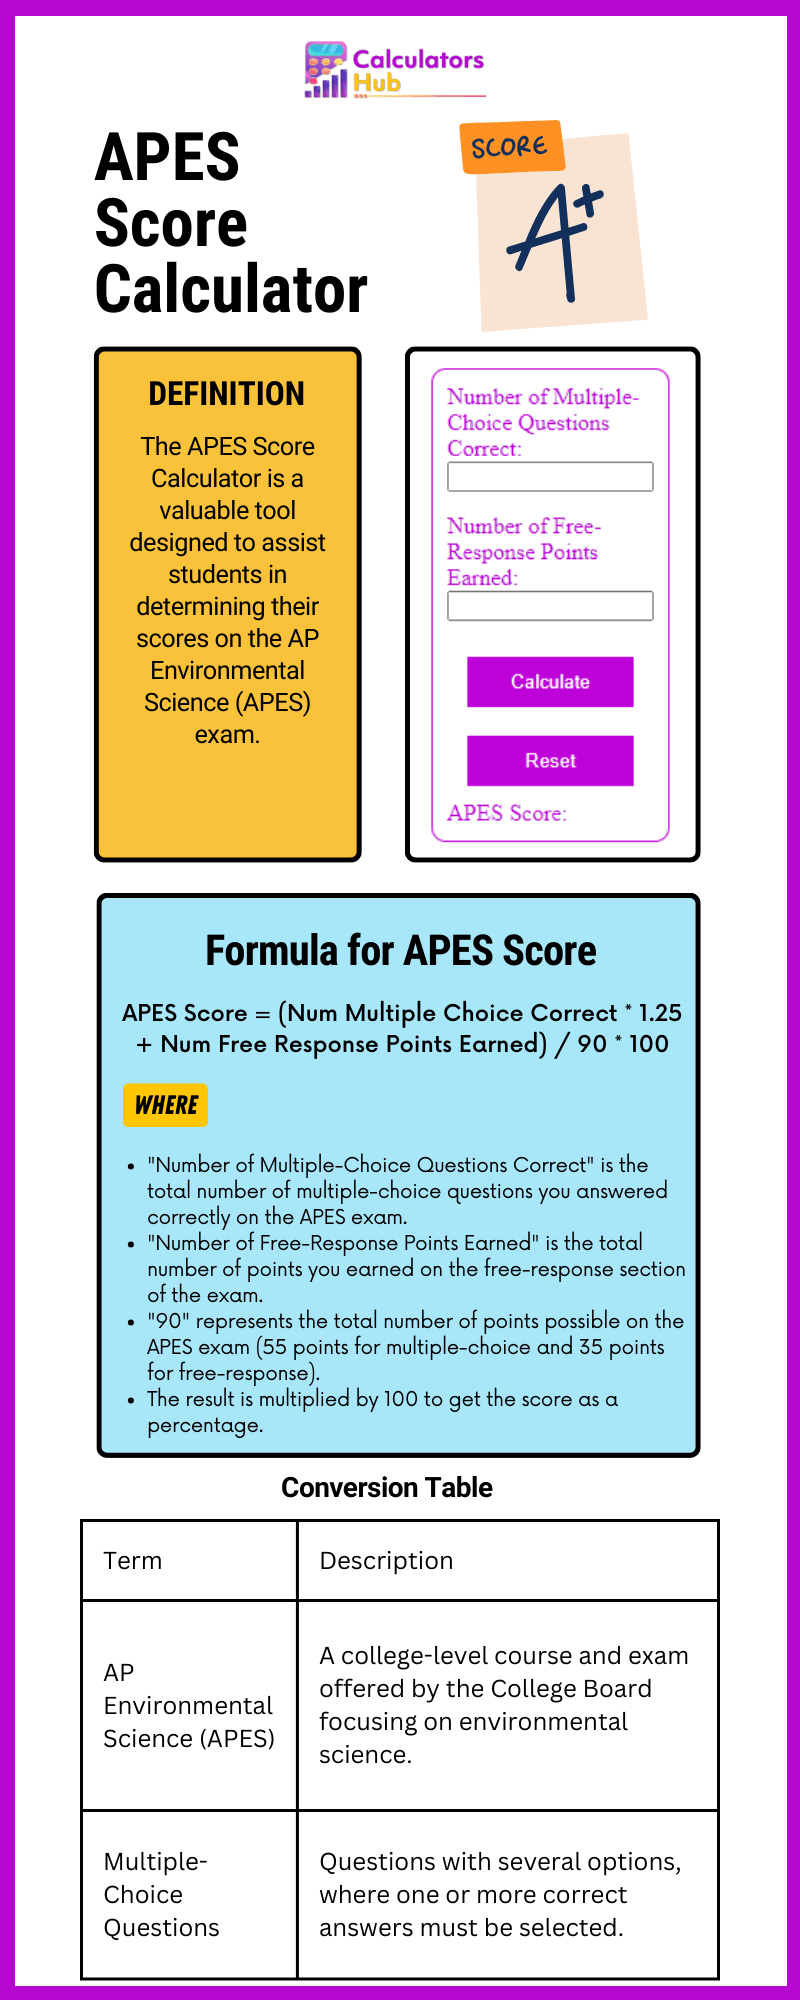 APES Score Calculator Online